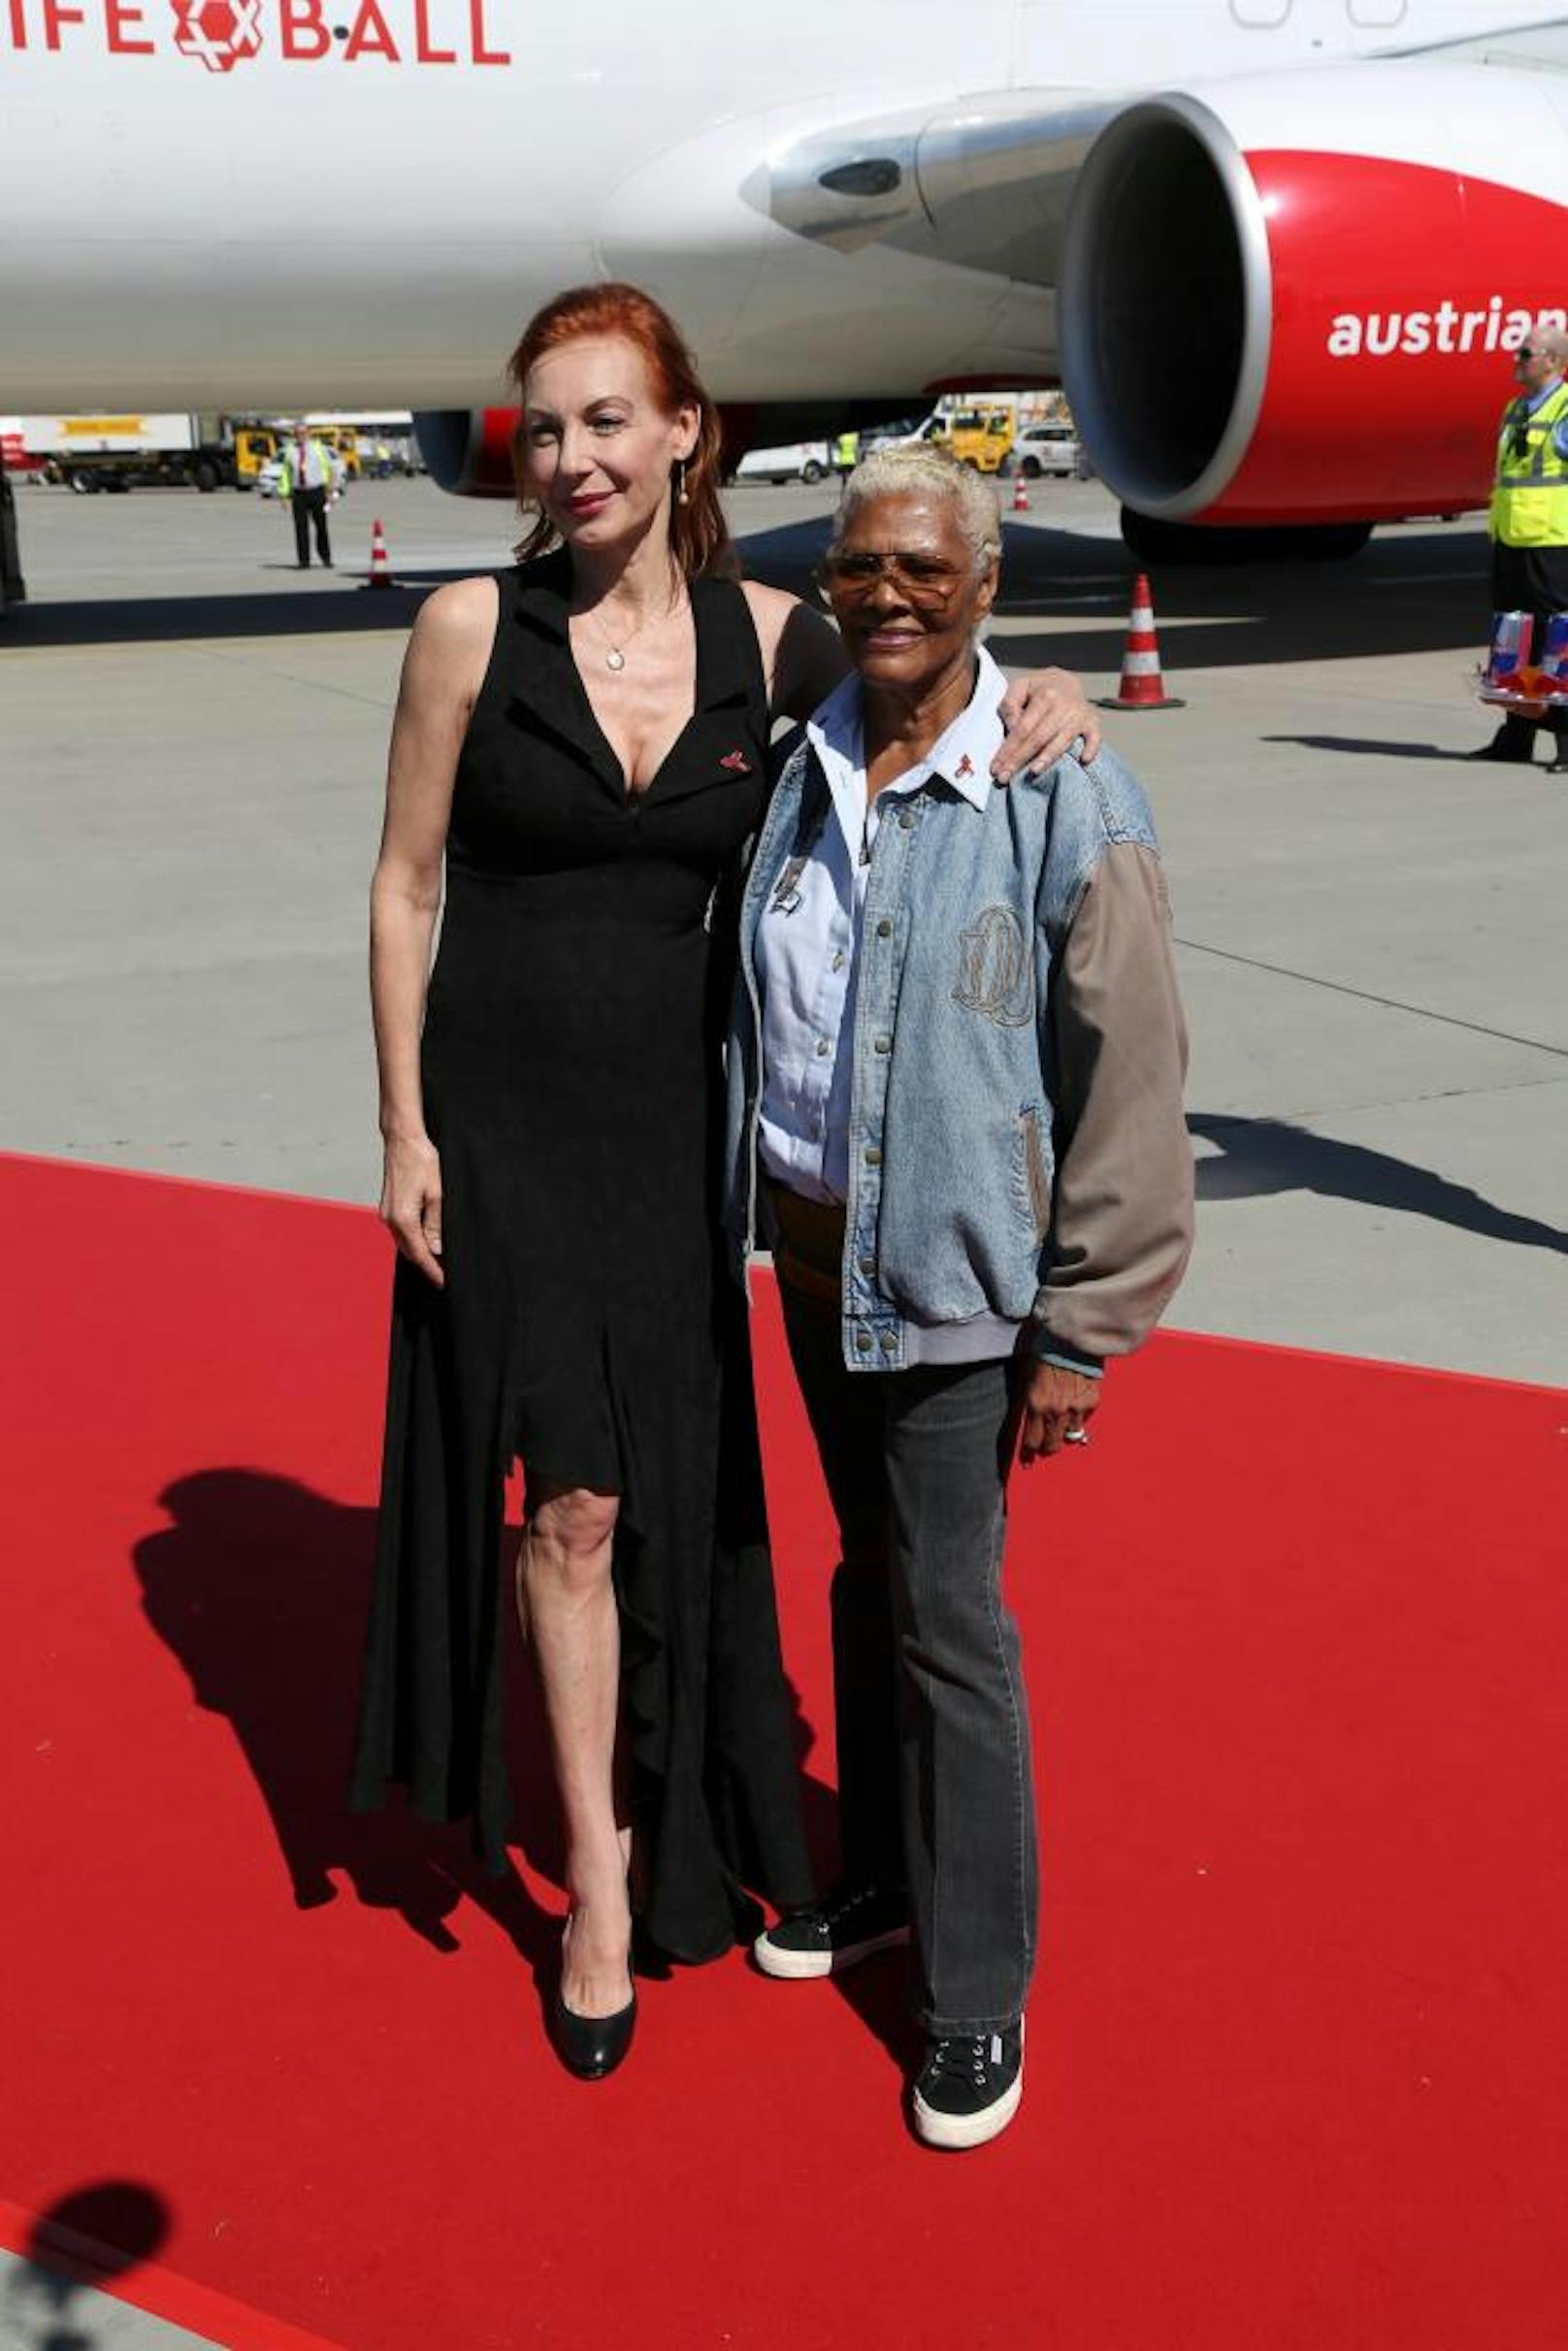 Ute Lemper (li.) und Dionne Warwick bei der Ankunft des Life Ball Fliegers am Flughafen Wien am 9. Juni 2017